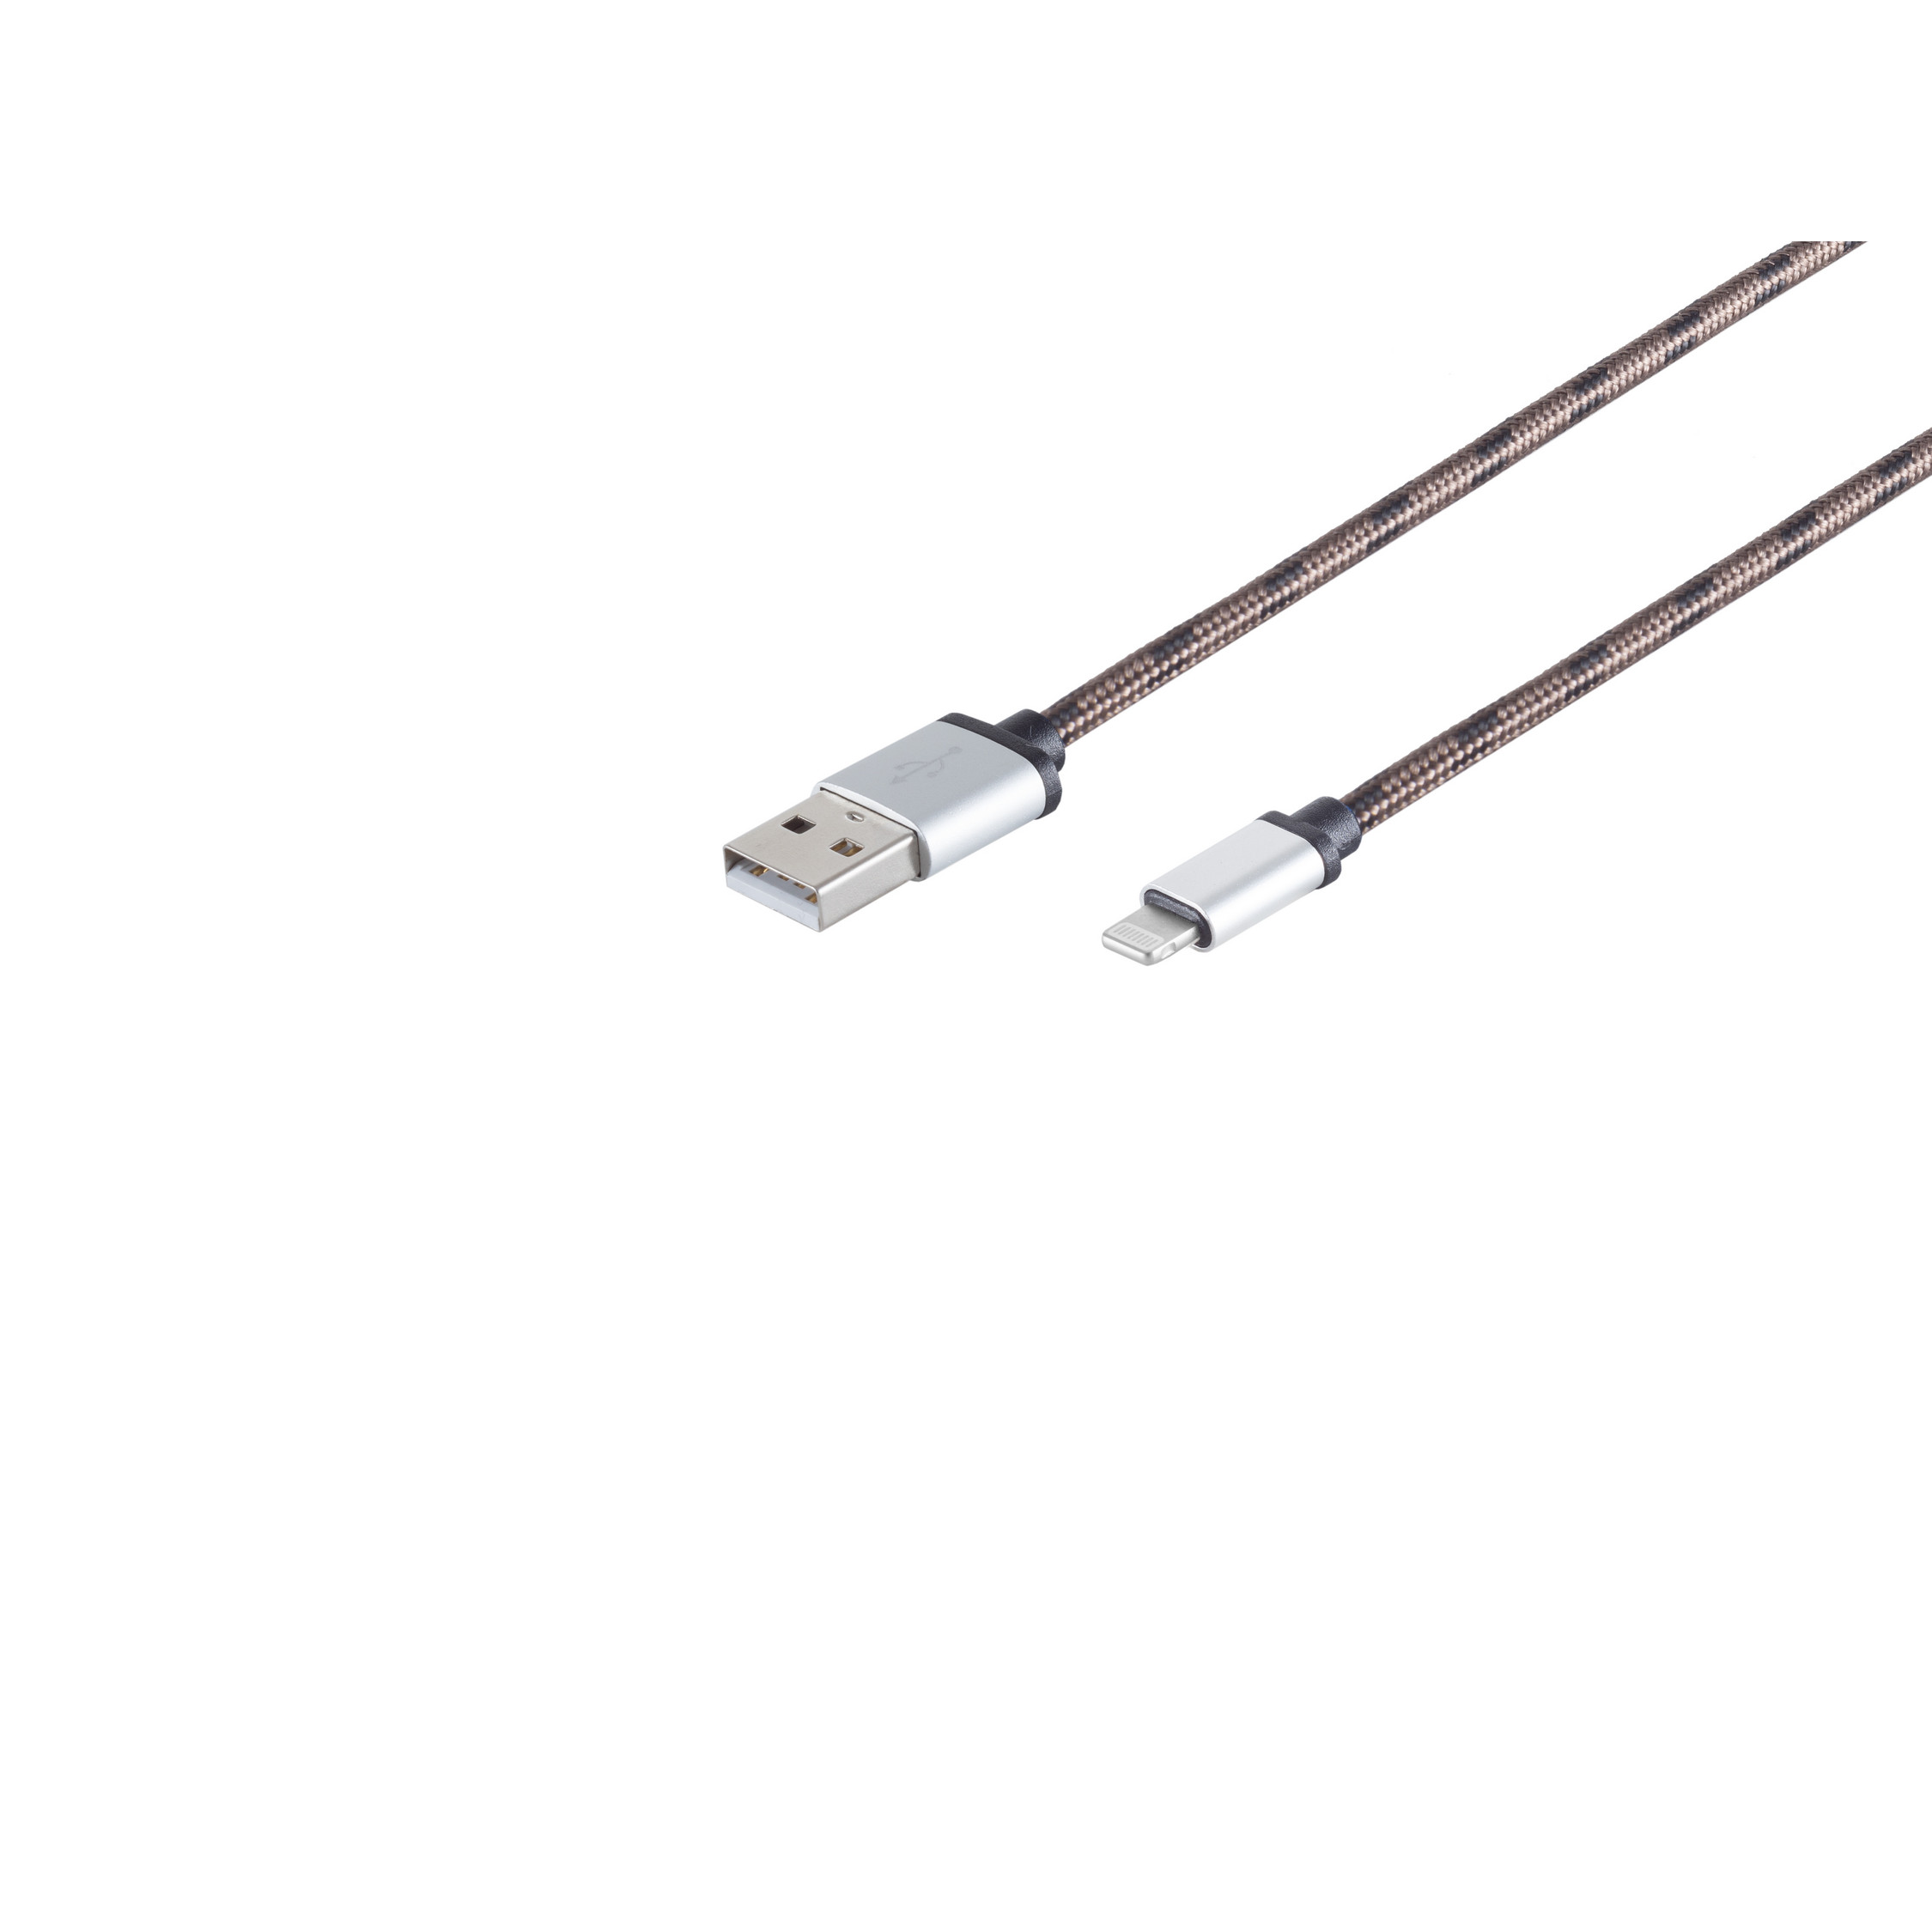 S/CONN MAXIMUM Kabel Stecker USB-Ladekabel 0,9m Stecker A auf CONNECTIVITY USB 8-pin